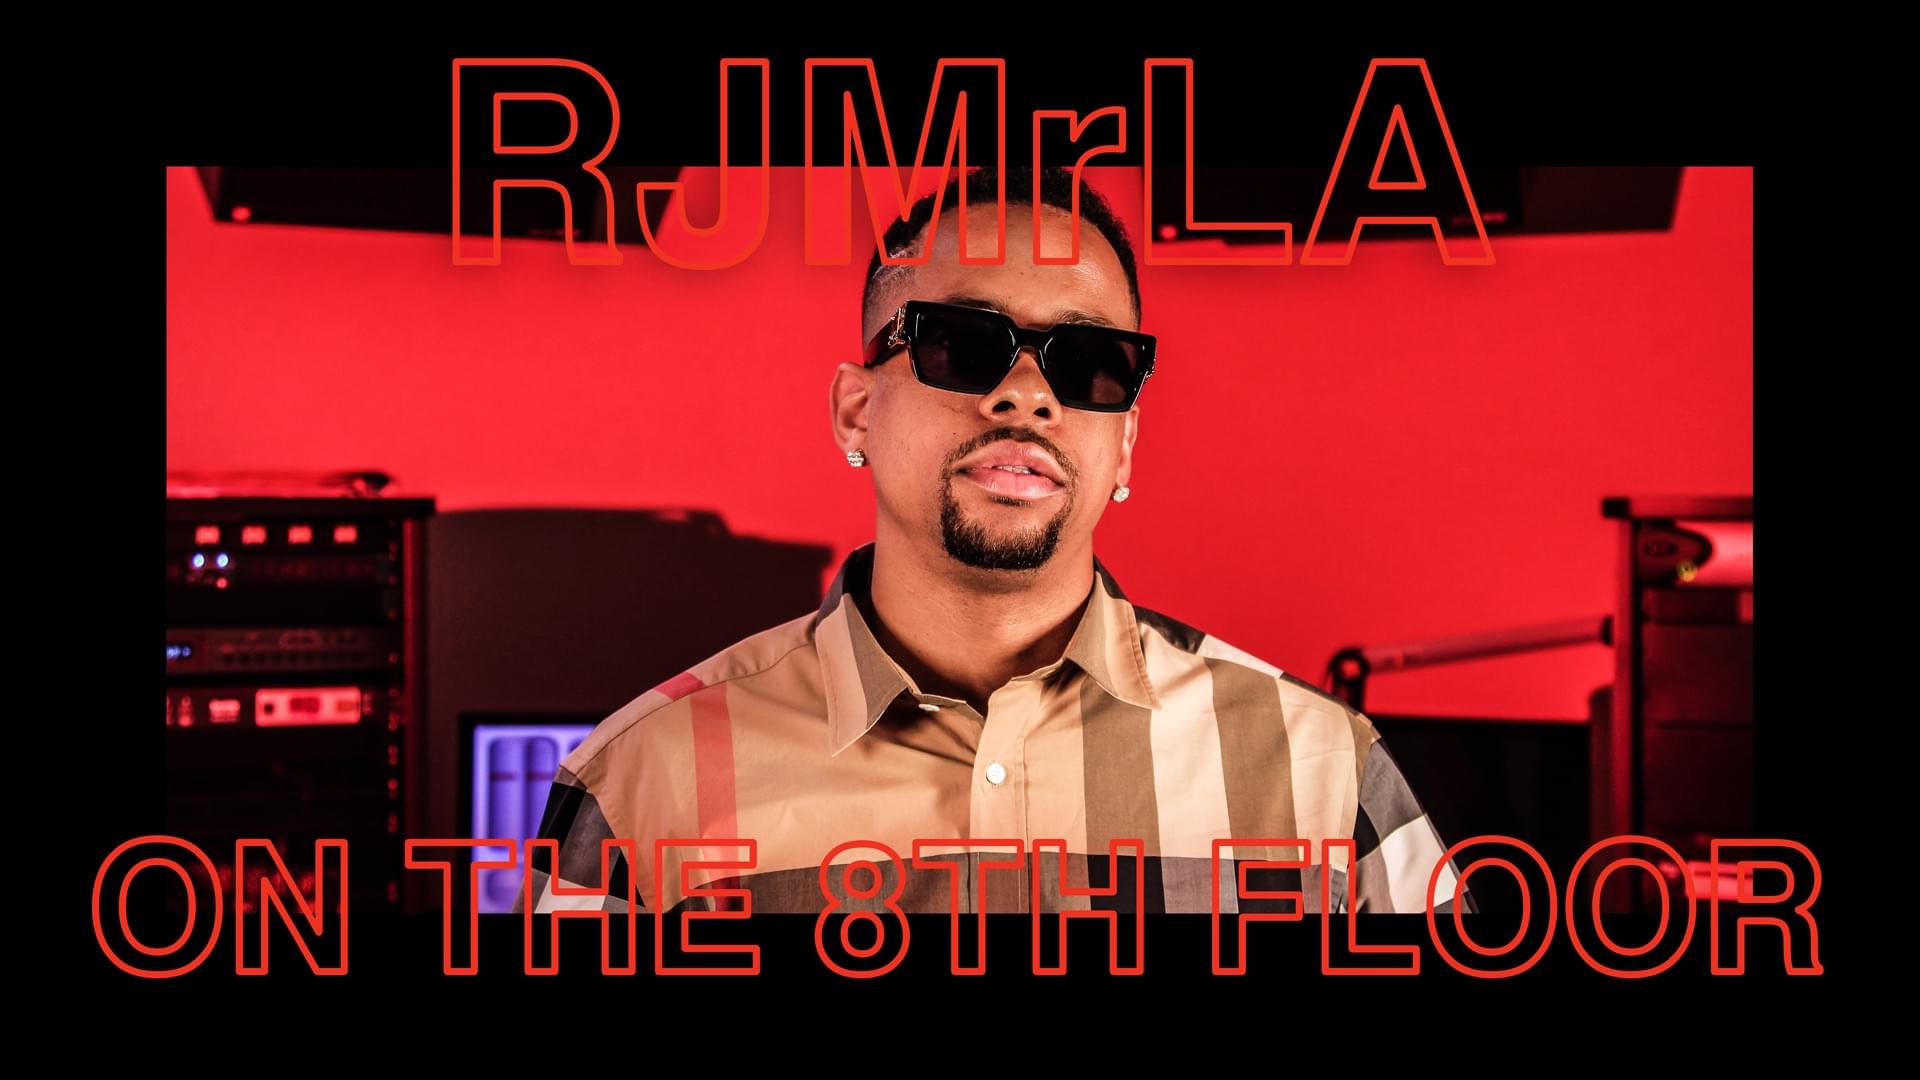 RJMrLA Performs Stripped-Down “Rat Race” LIVE #OnThe8thFloor [WATCH]